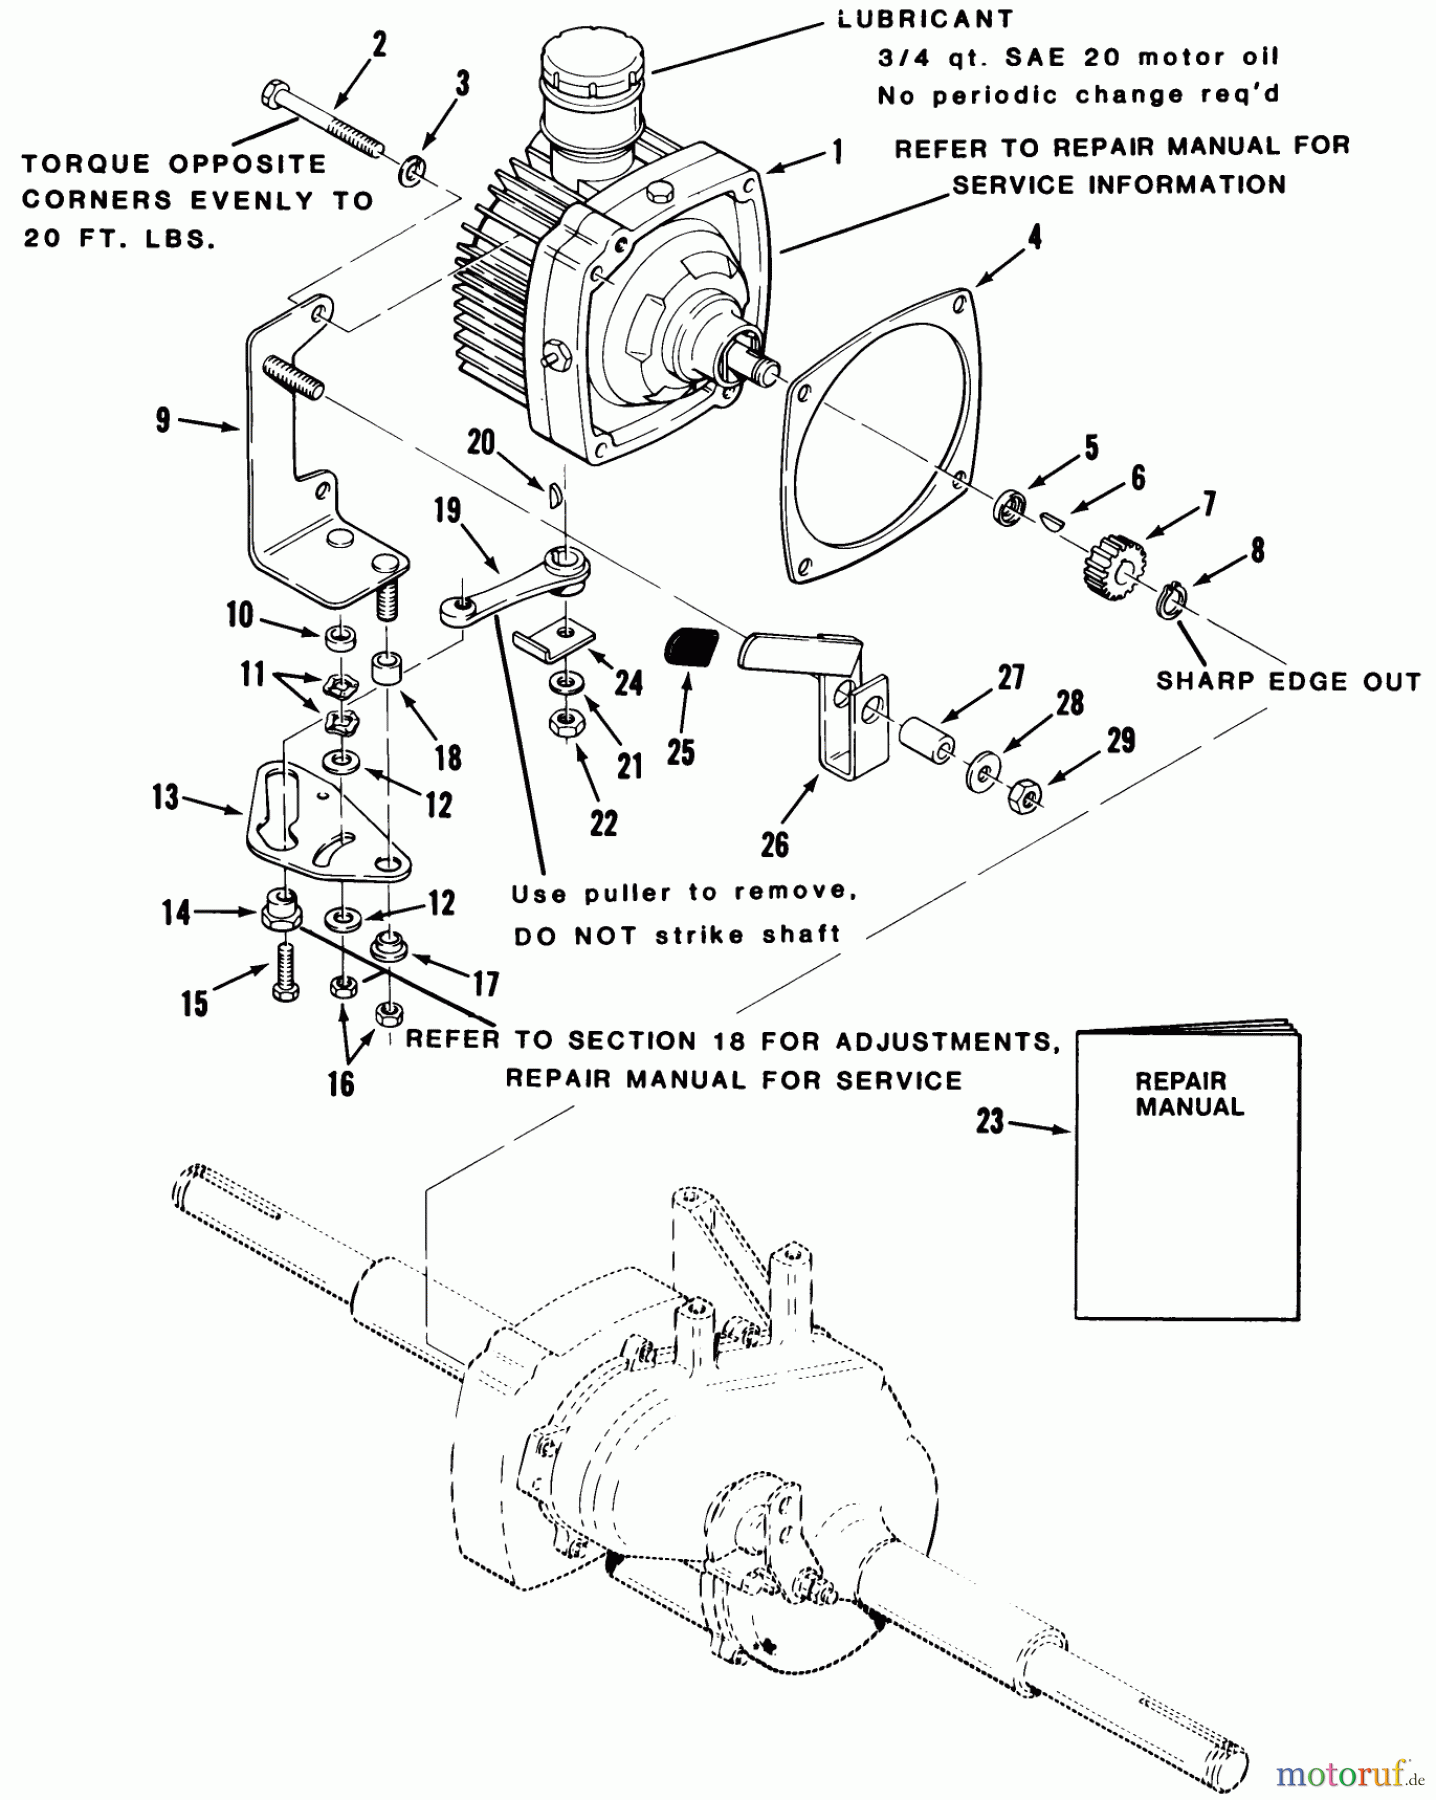  Toro Neu Mowers, Lawn & Garden Tractor Seite 1 22-13KE01 (252-H) - Toro 252-H Tractor, 1988 AUTOMATIC TRANSMISSION